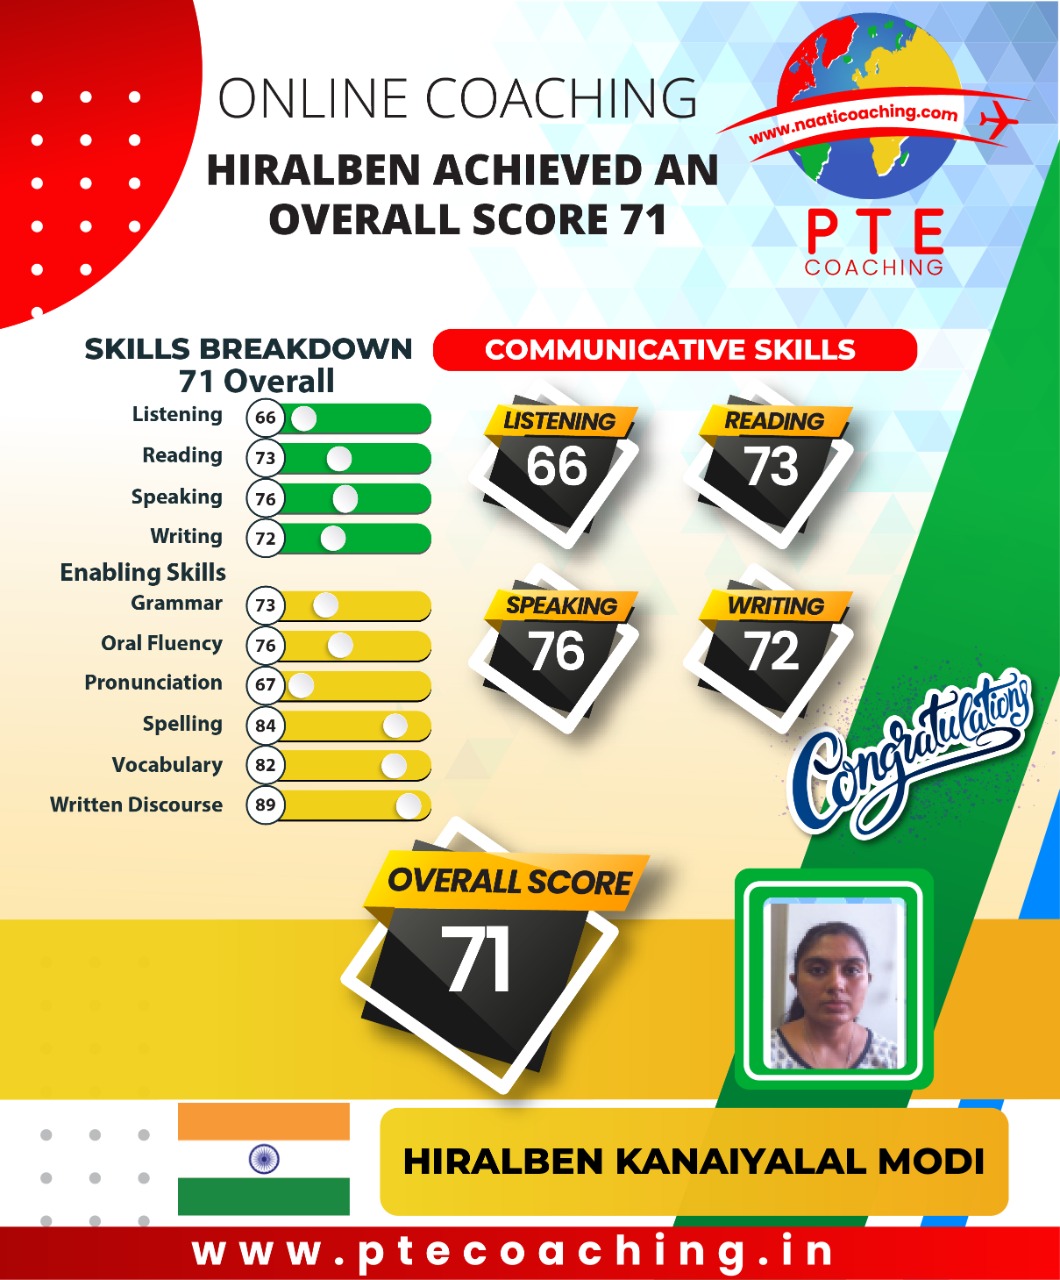 PTE Coaching Scorecard - Hiralben achieved an overall score 71